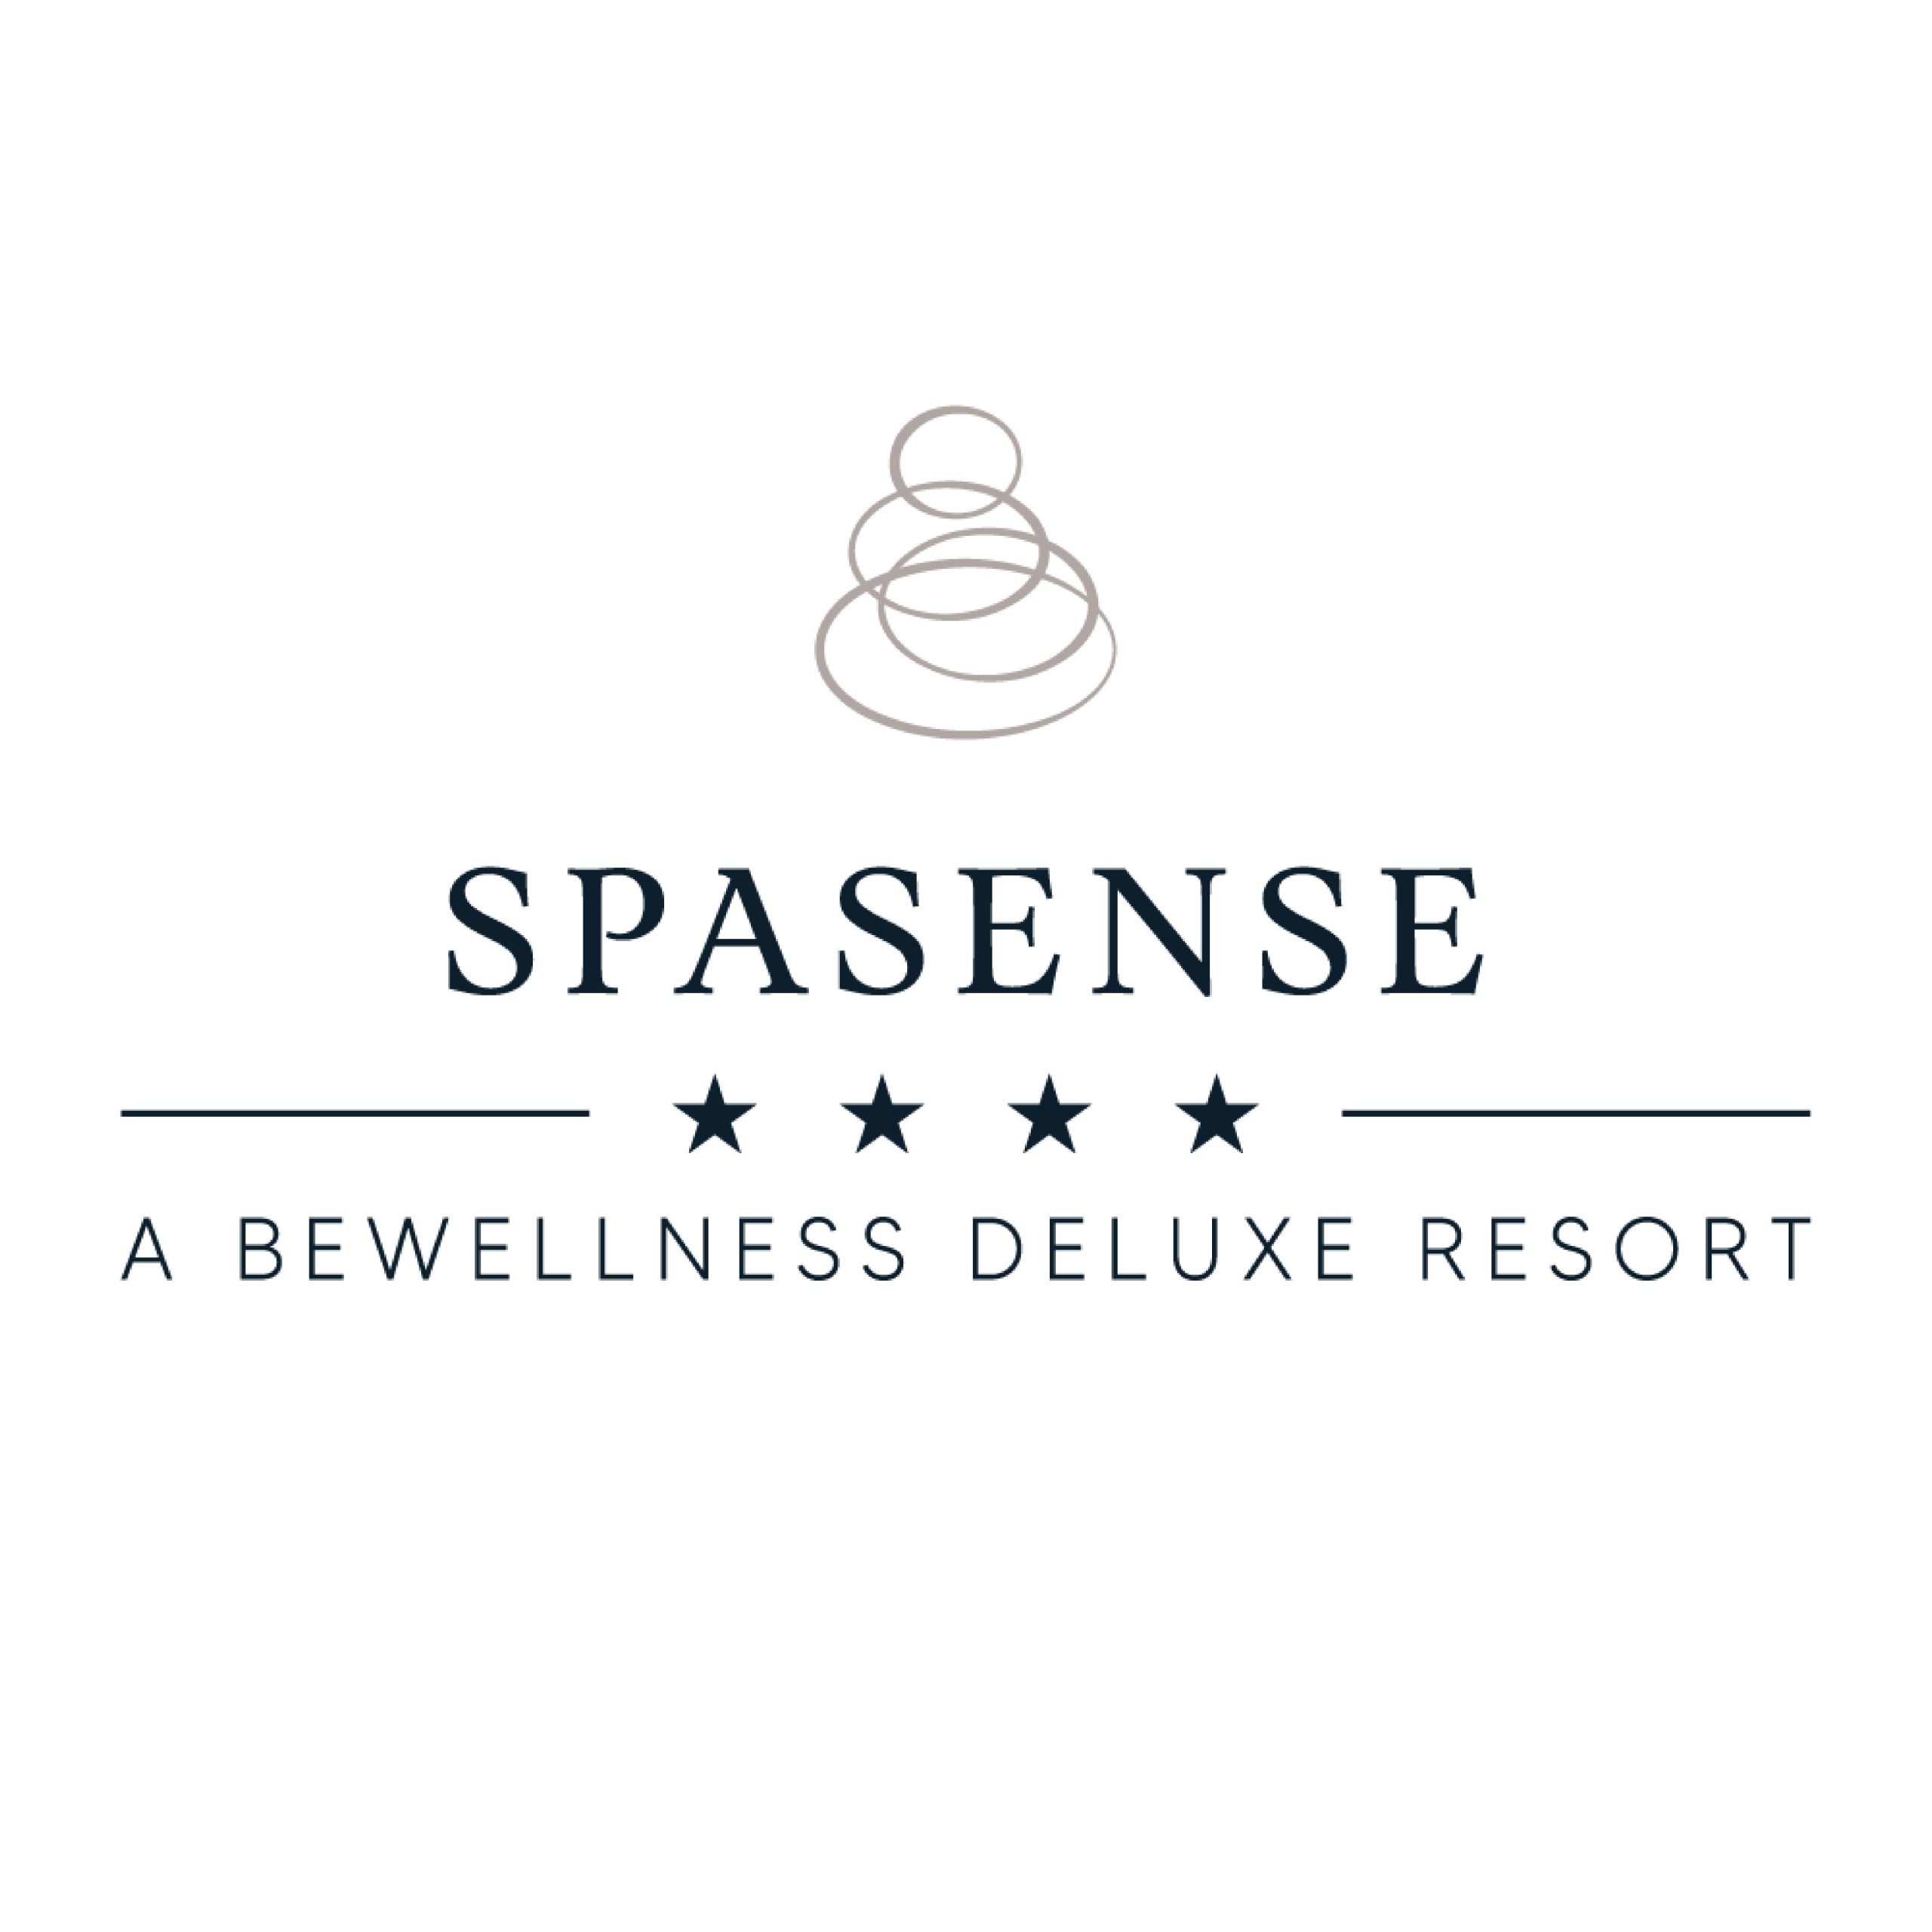 SpaSense